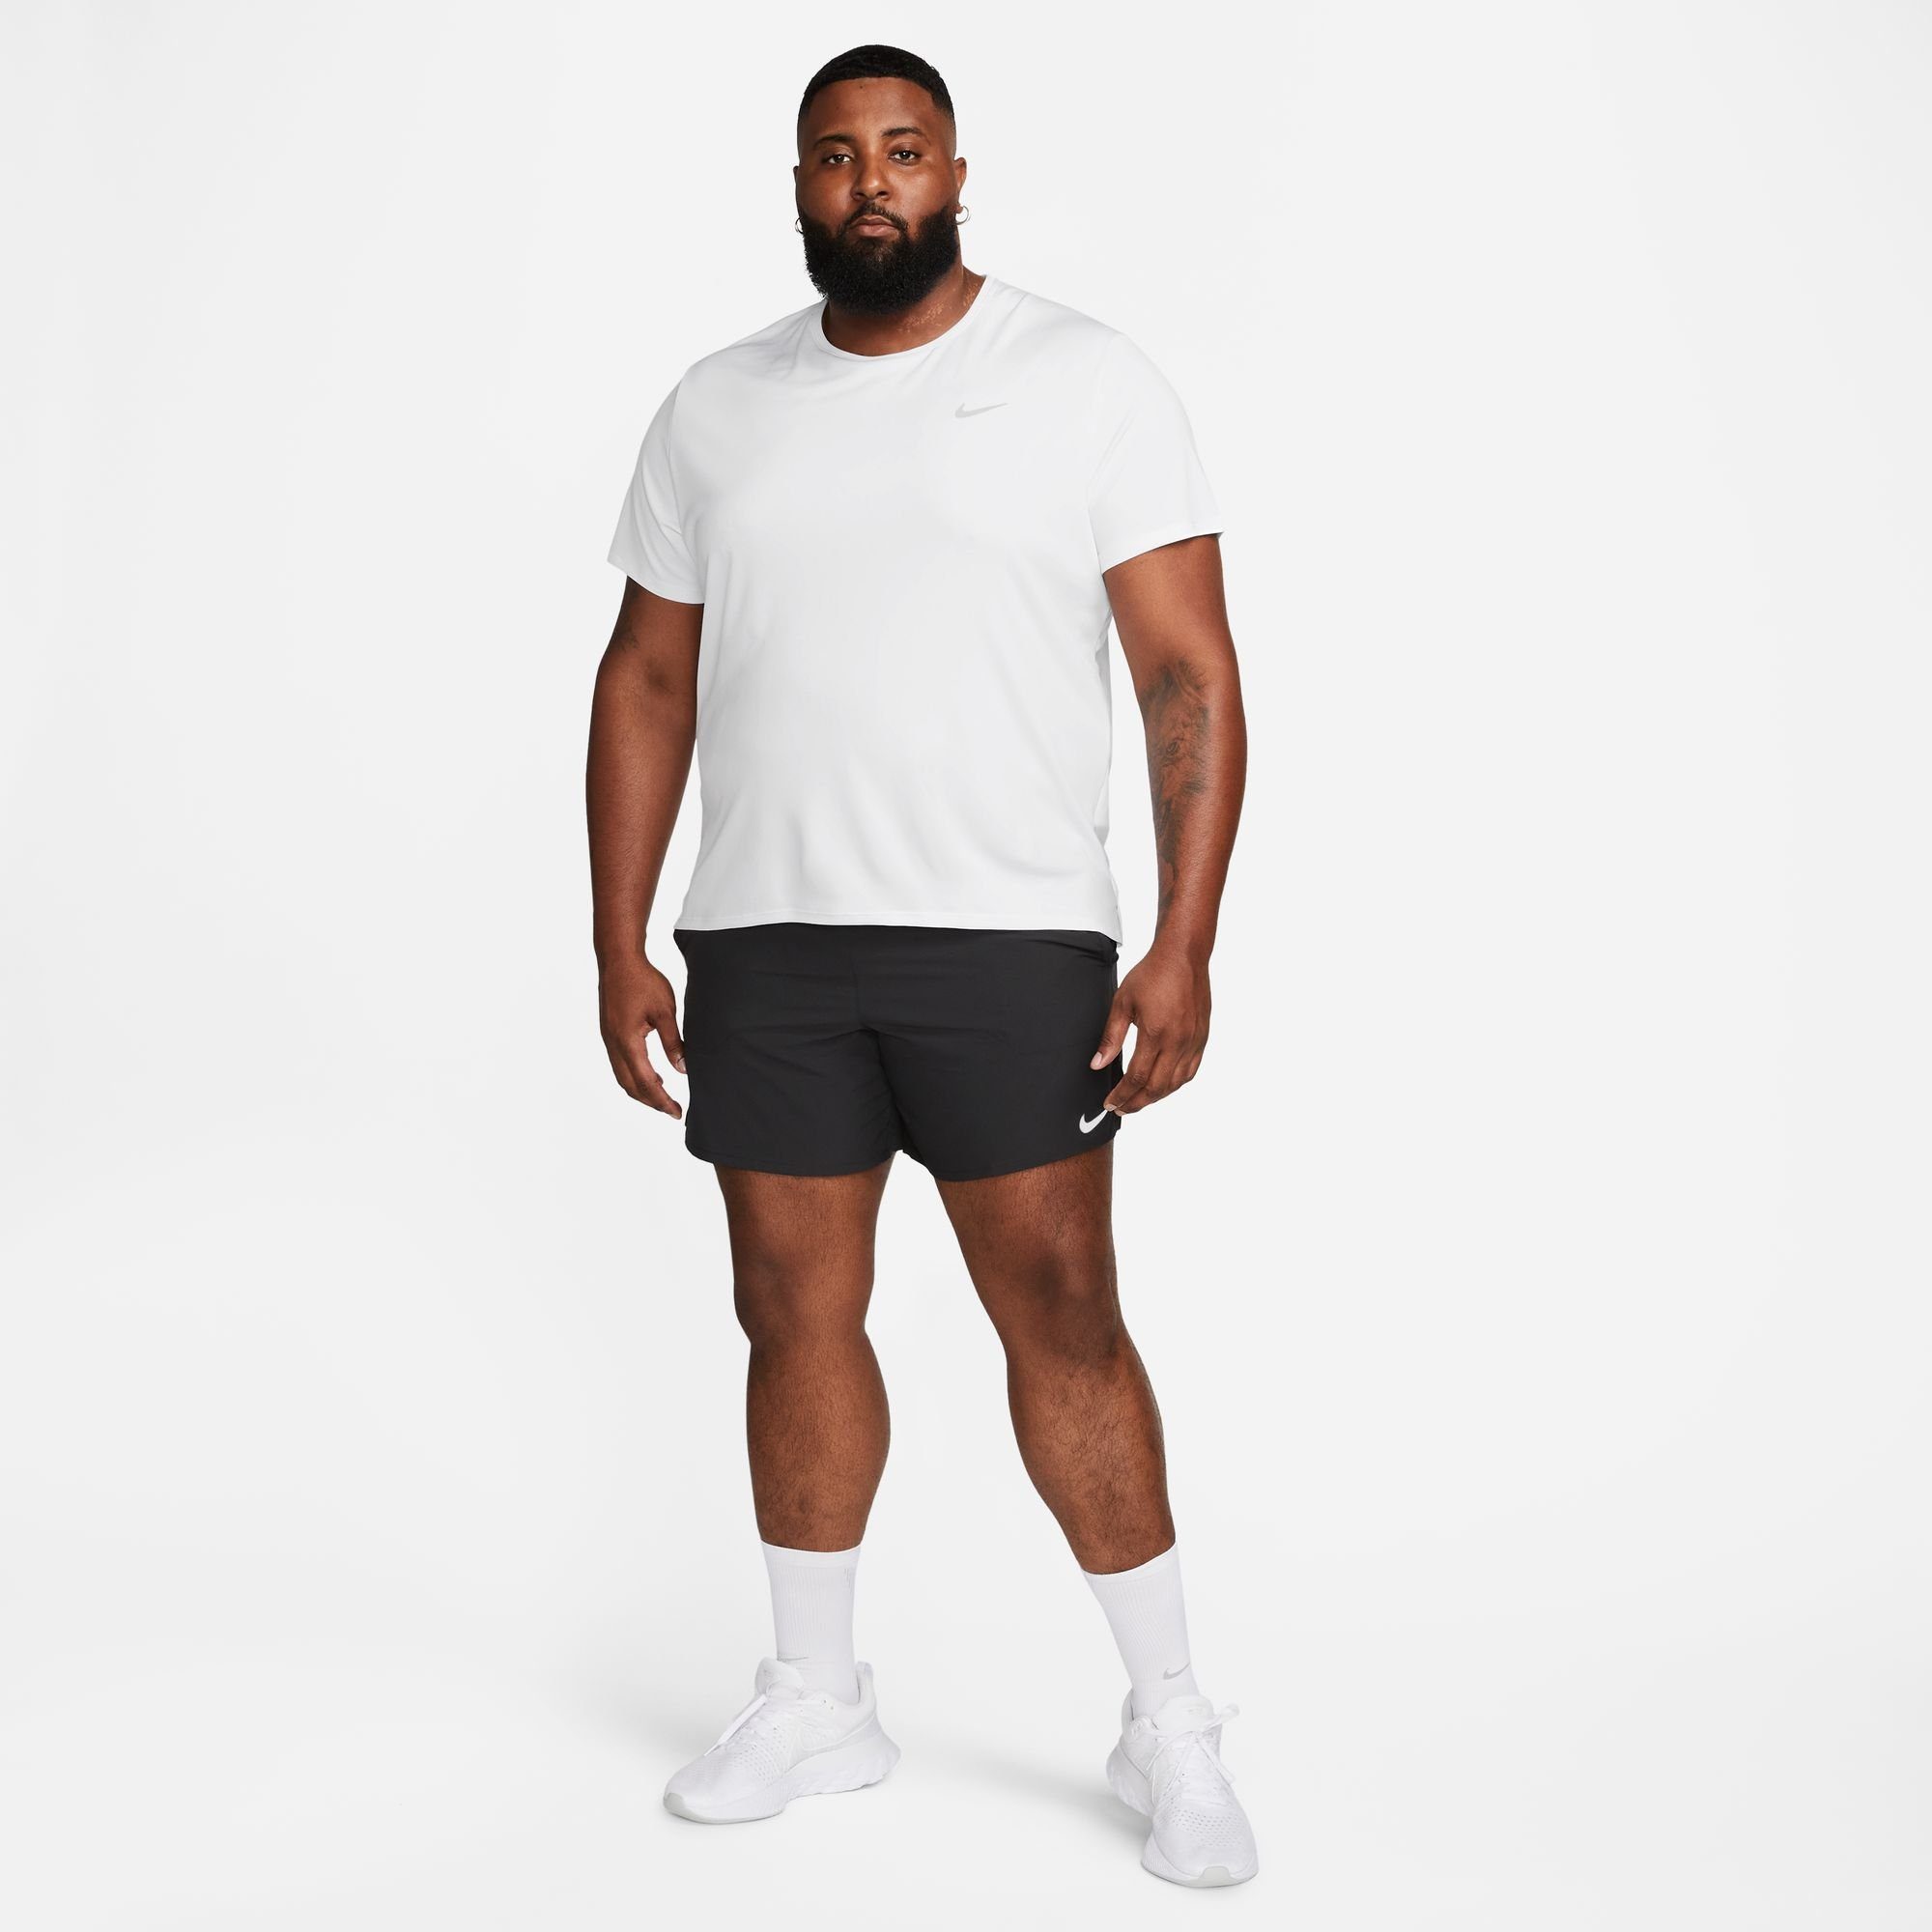 Nike UV TOP WHITE/REFLECTIVE SHORT-SLEEVE MEN'S SILV MILER Laufshirt DRI-FIT RUNNING